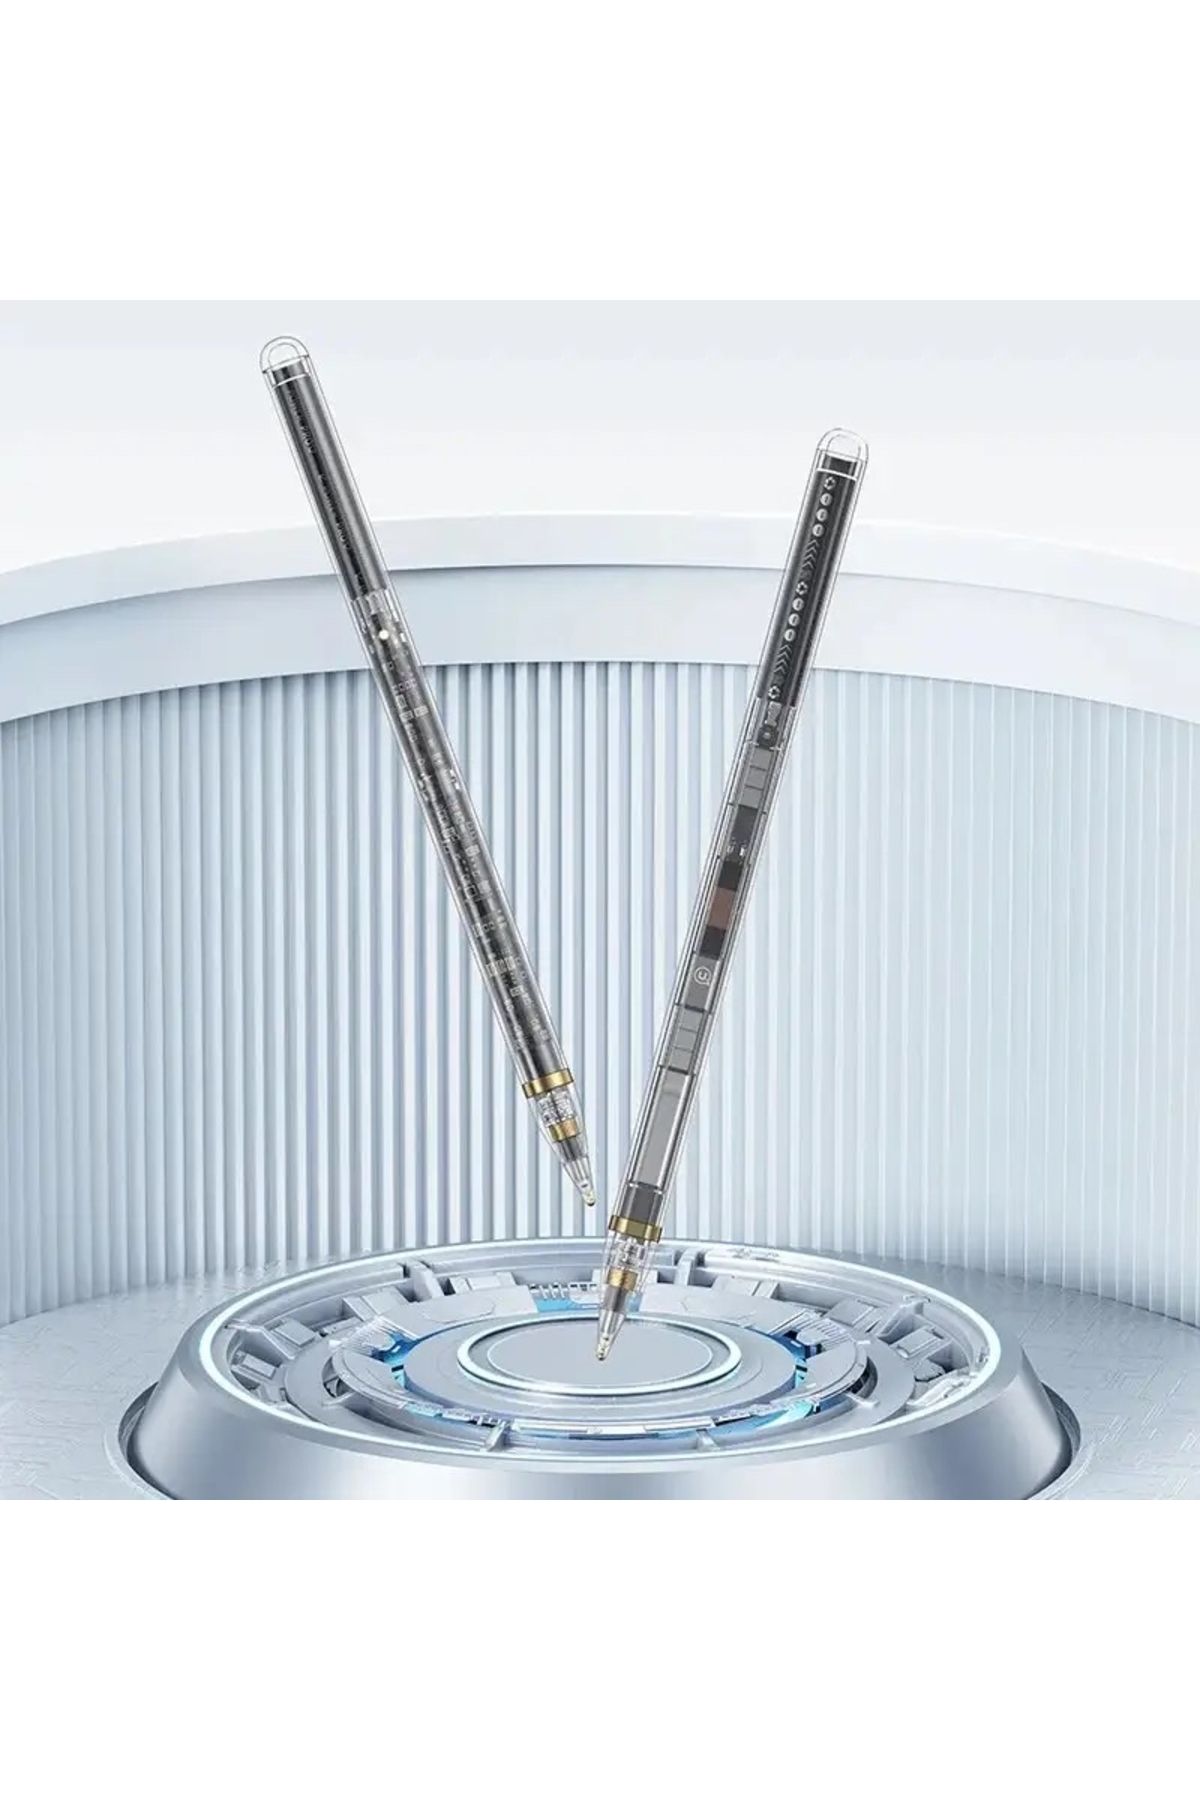 EHZ TEKNOLOJİ şeffaf manyetik şarj eğim duyarlı aktif dokunmatik kapasitif Stylus kalem kalem